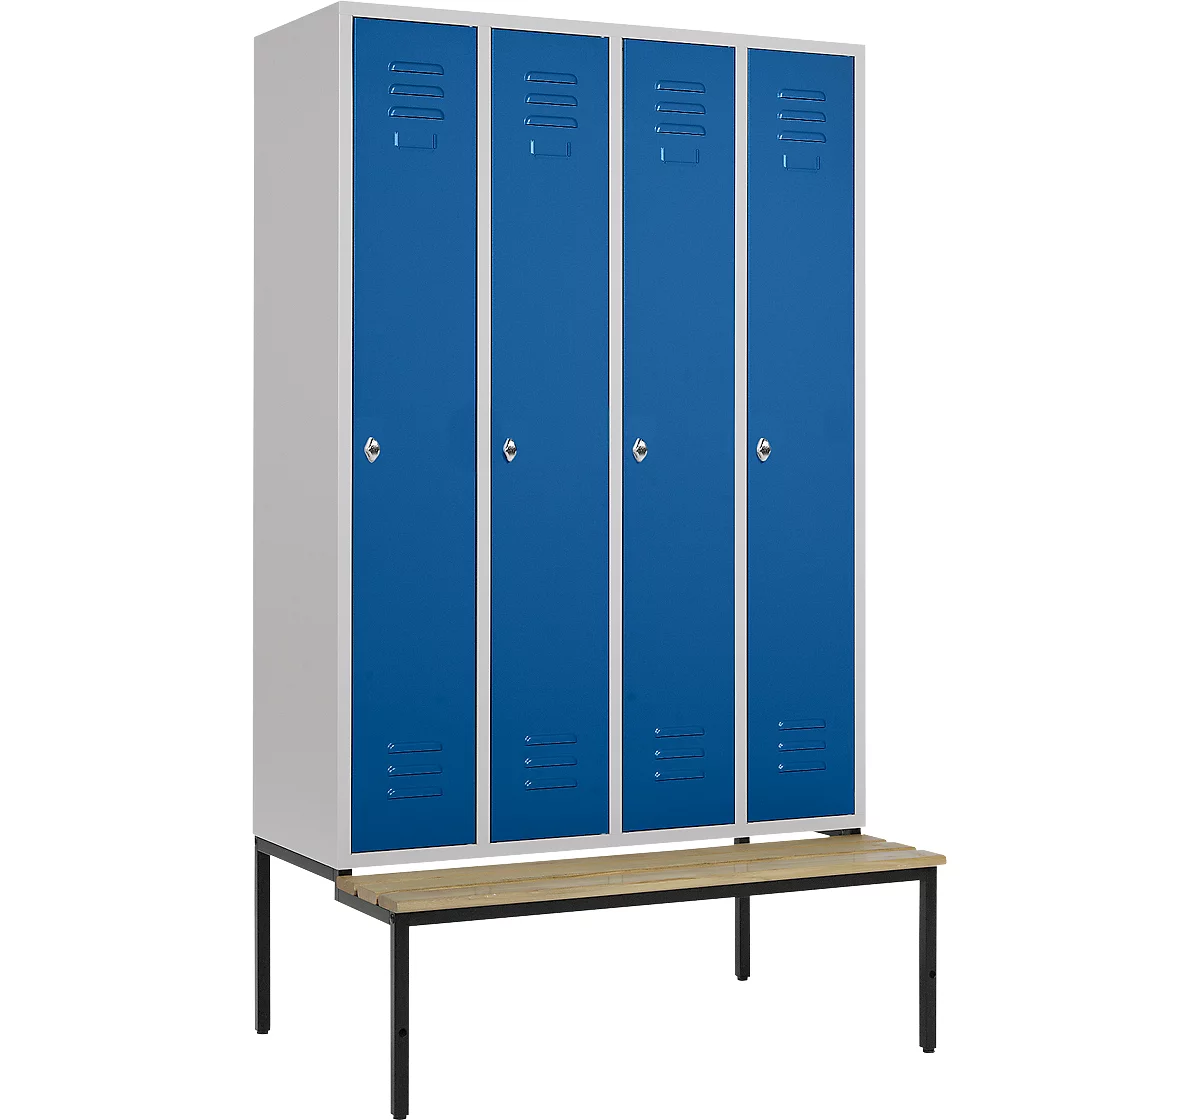 Schäfer Shop Select armario ropero, 4 compartimentos de 300 mm de ancho cada uno, cerradura de pestillo giratorio, con banco, puerta azul genciana